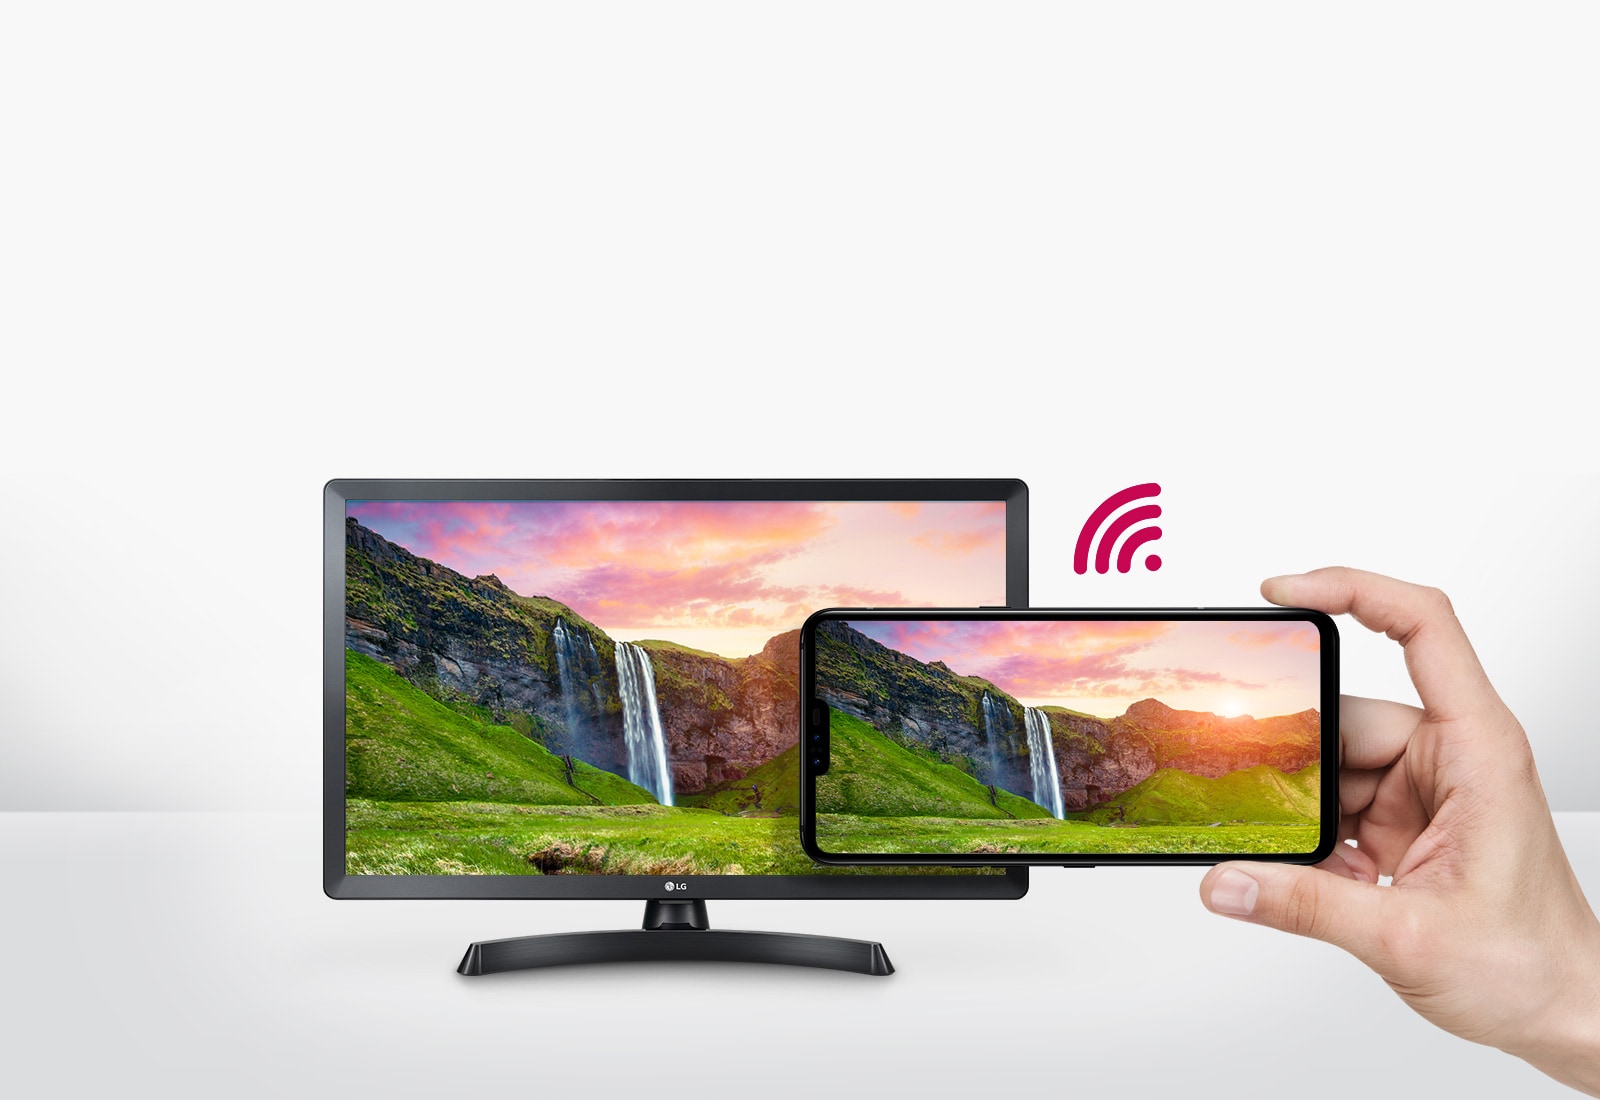 Televisor y Monitor LG 28TQ515S-WZ - 28 , HD - ComproFacil